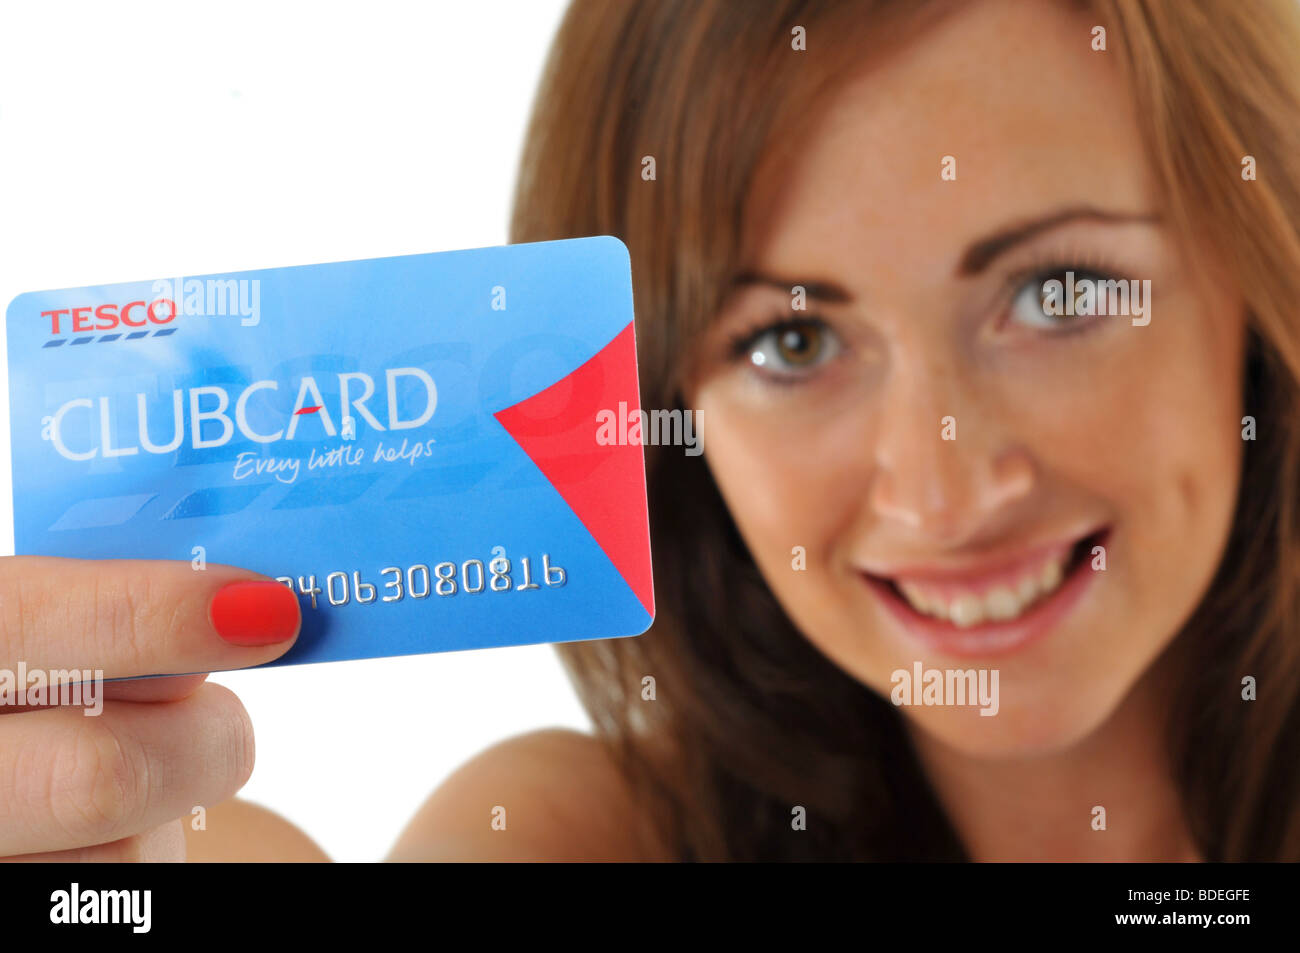 Tesco clubcard, woman holding Tesco clubcard Stock Photo